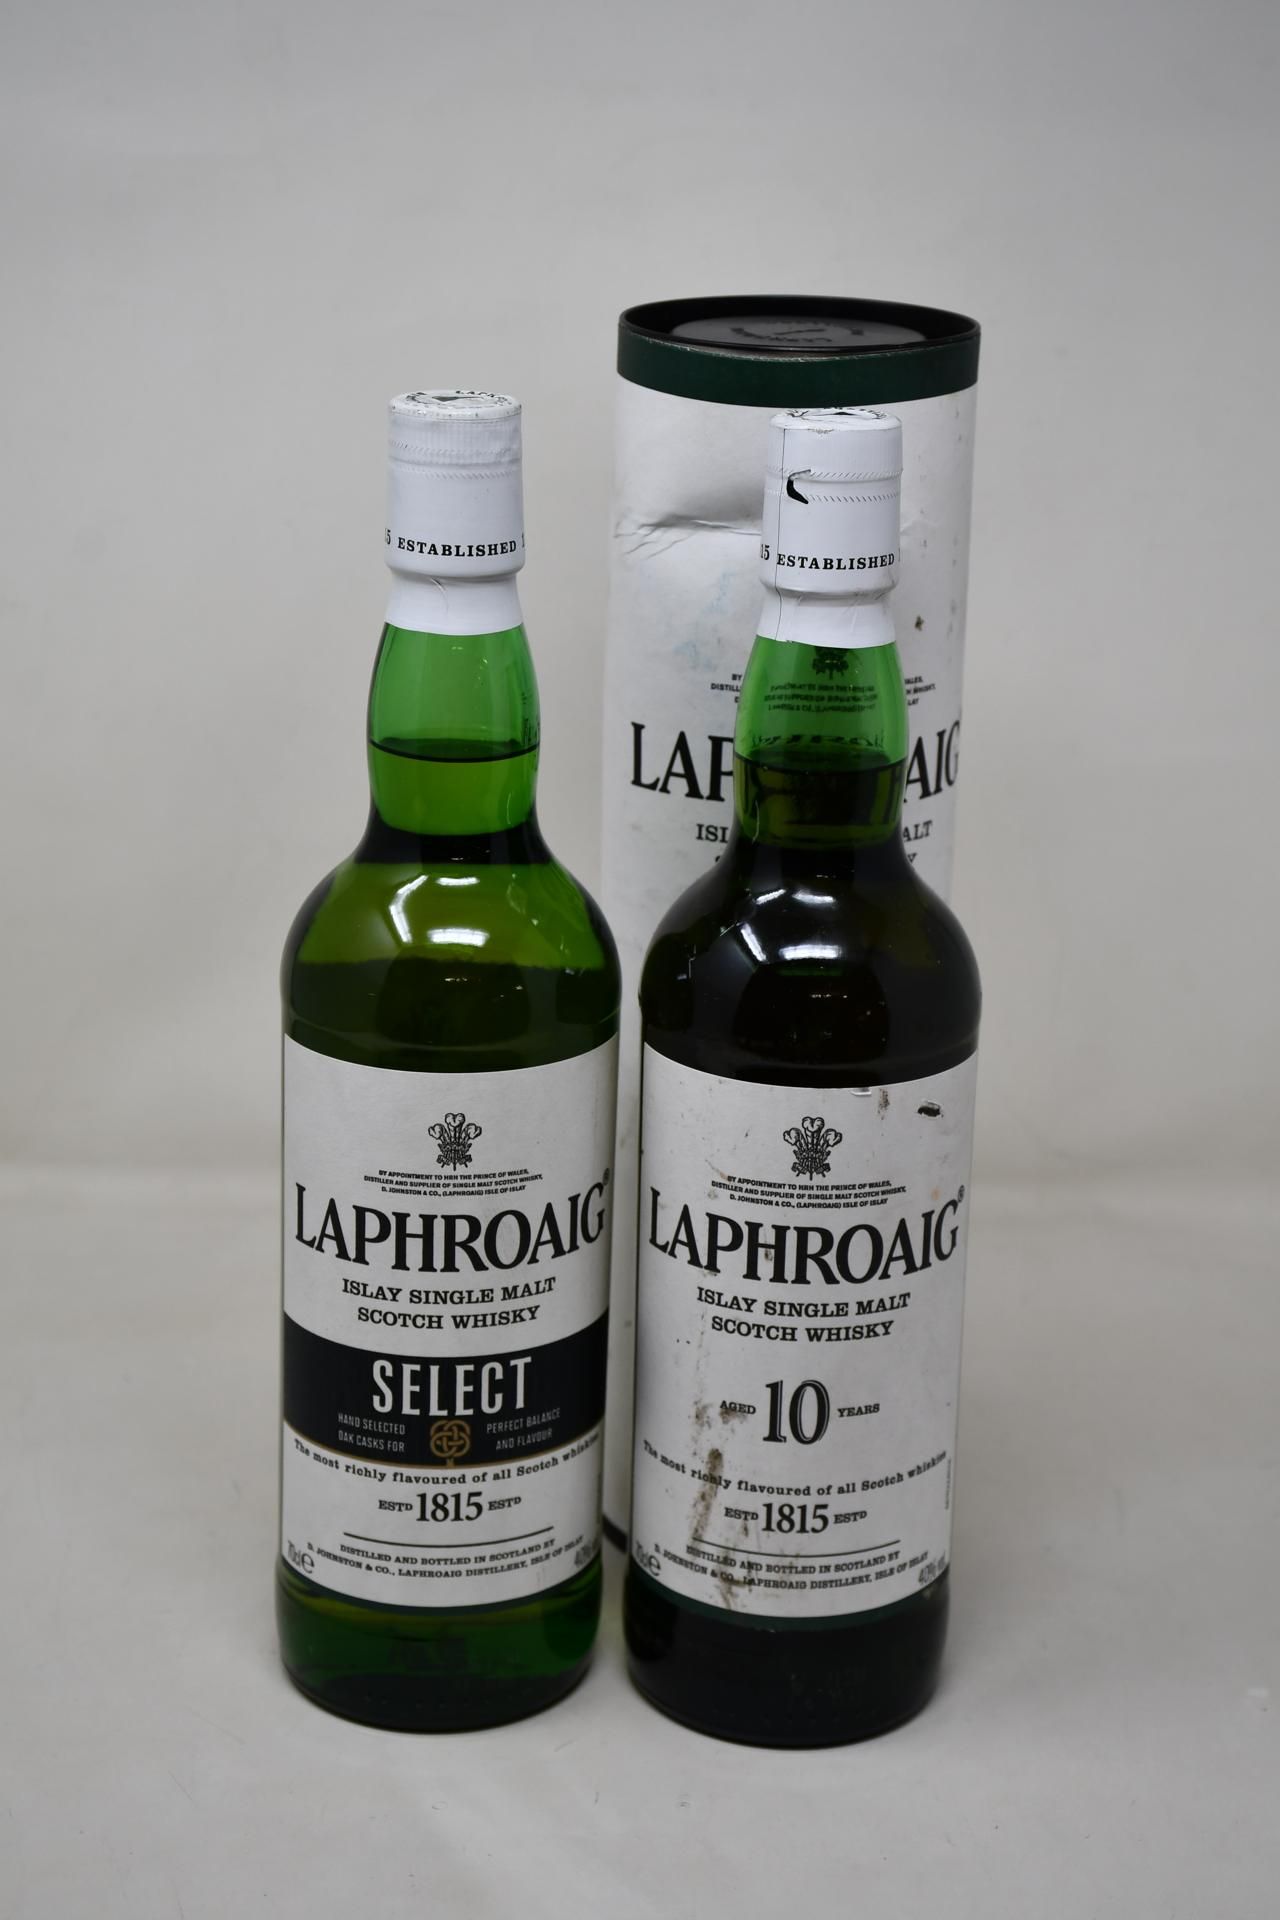 Laphroaig Select Islay Single Malt Scotch Whisky (700ml) and Laphroaig Islay Single Malt Scotch Whis